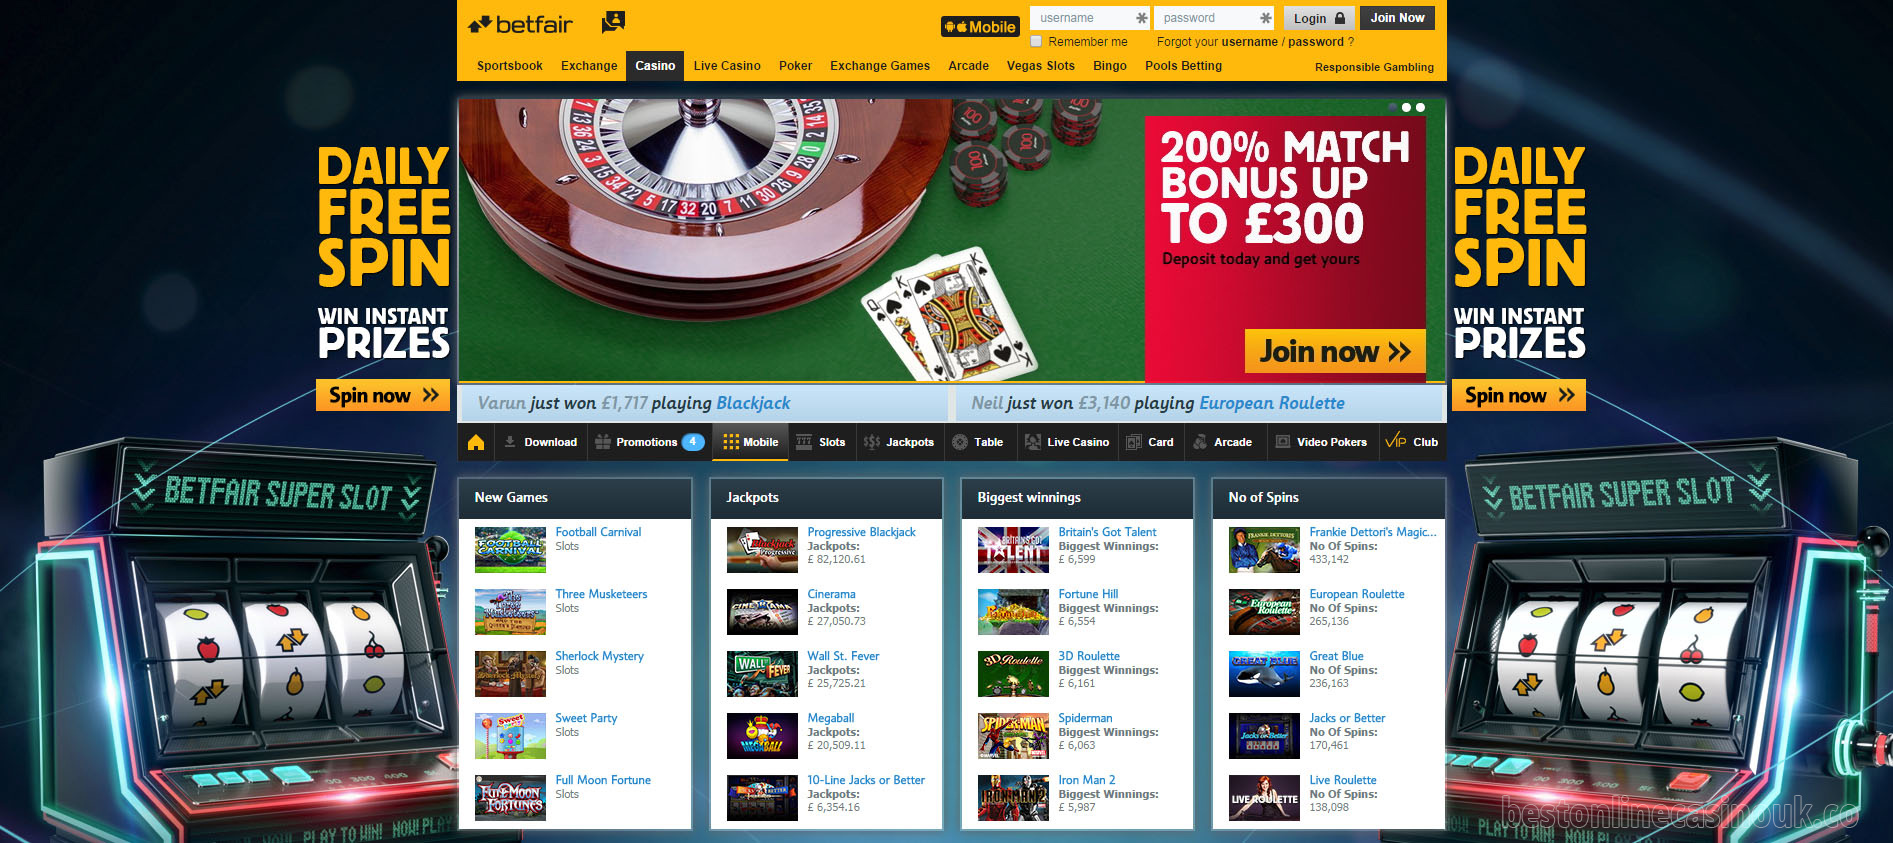 What Is The Best Online Casino То